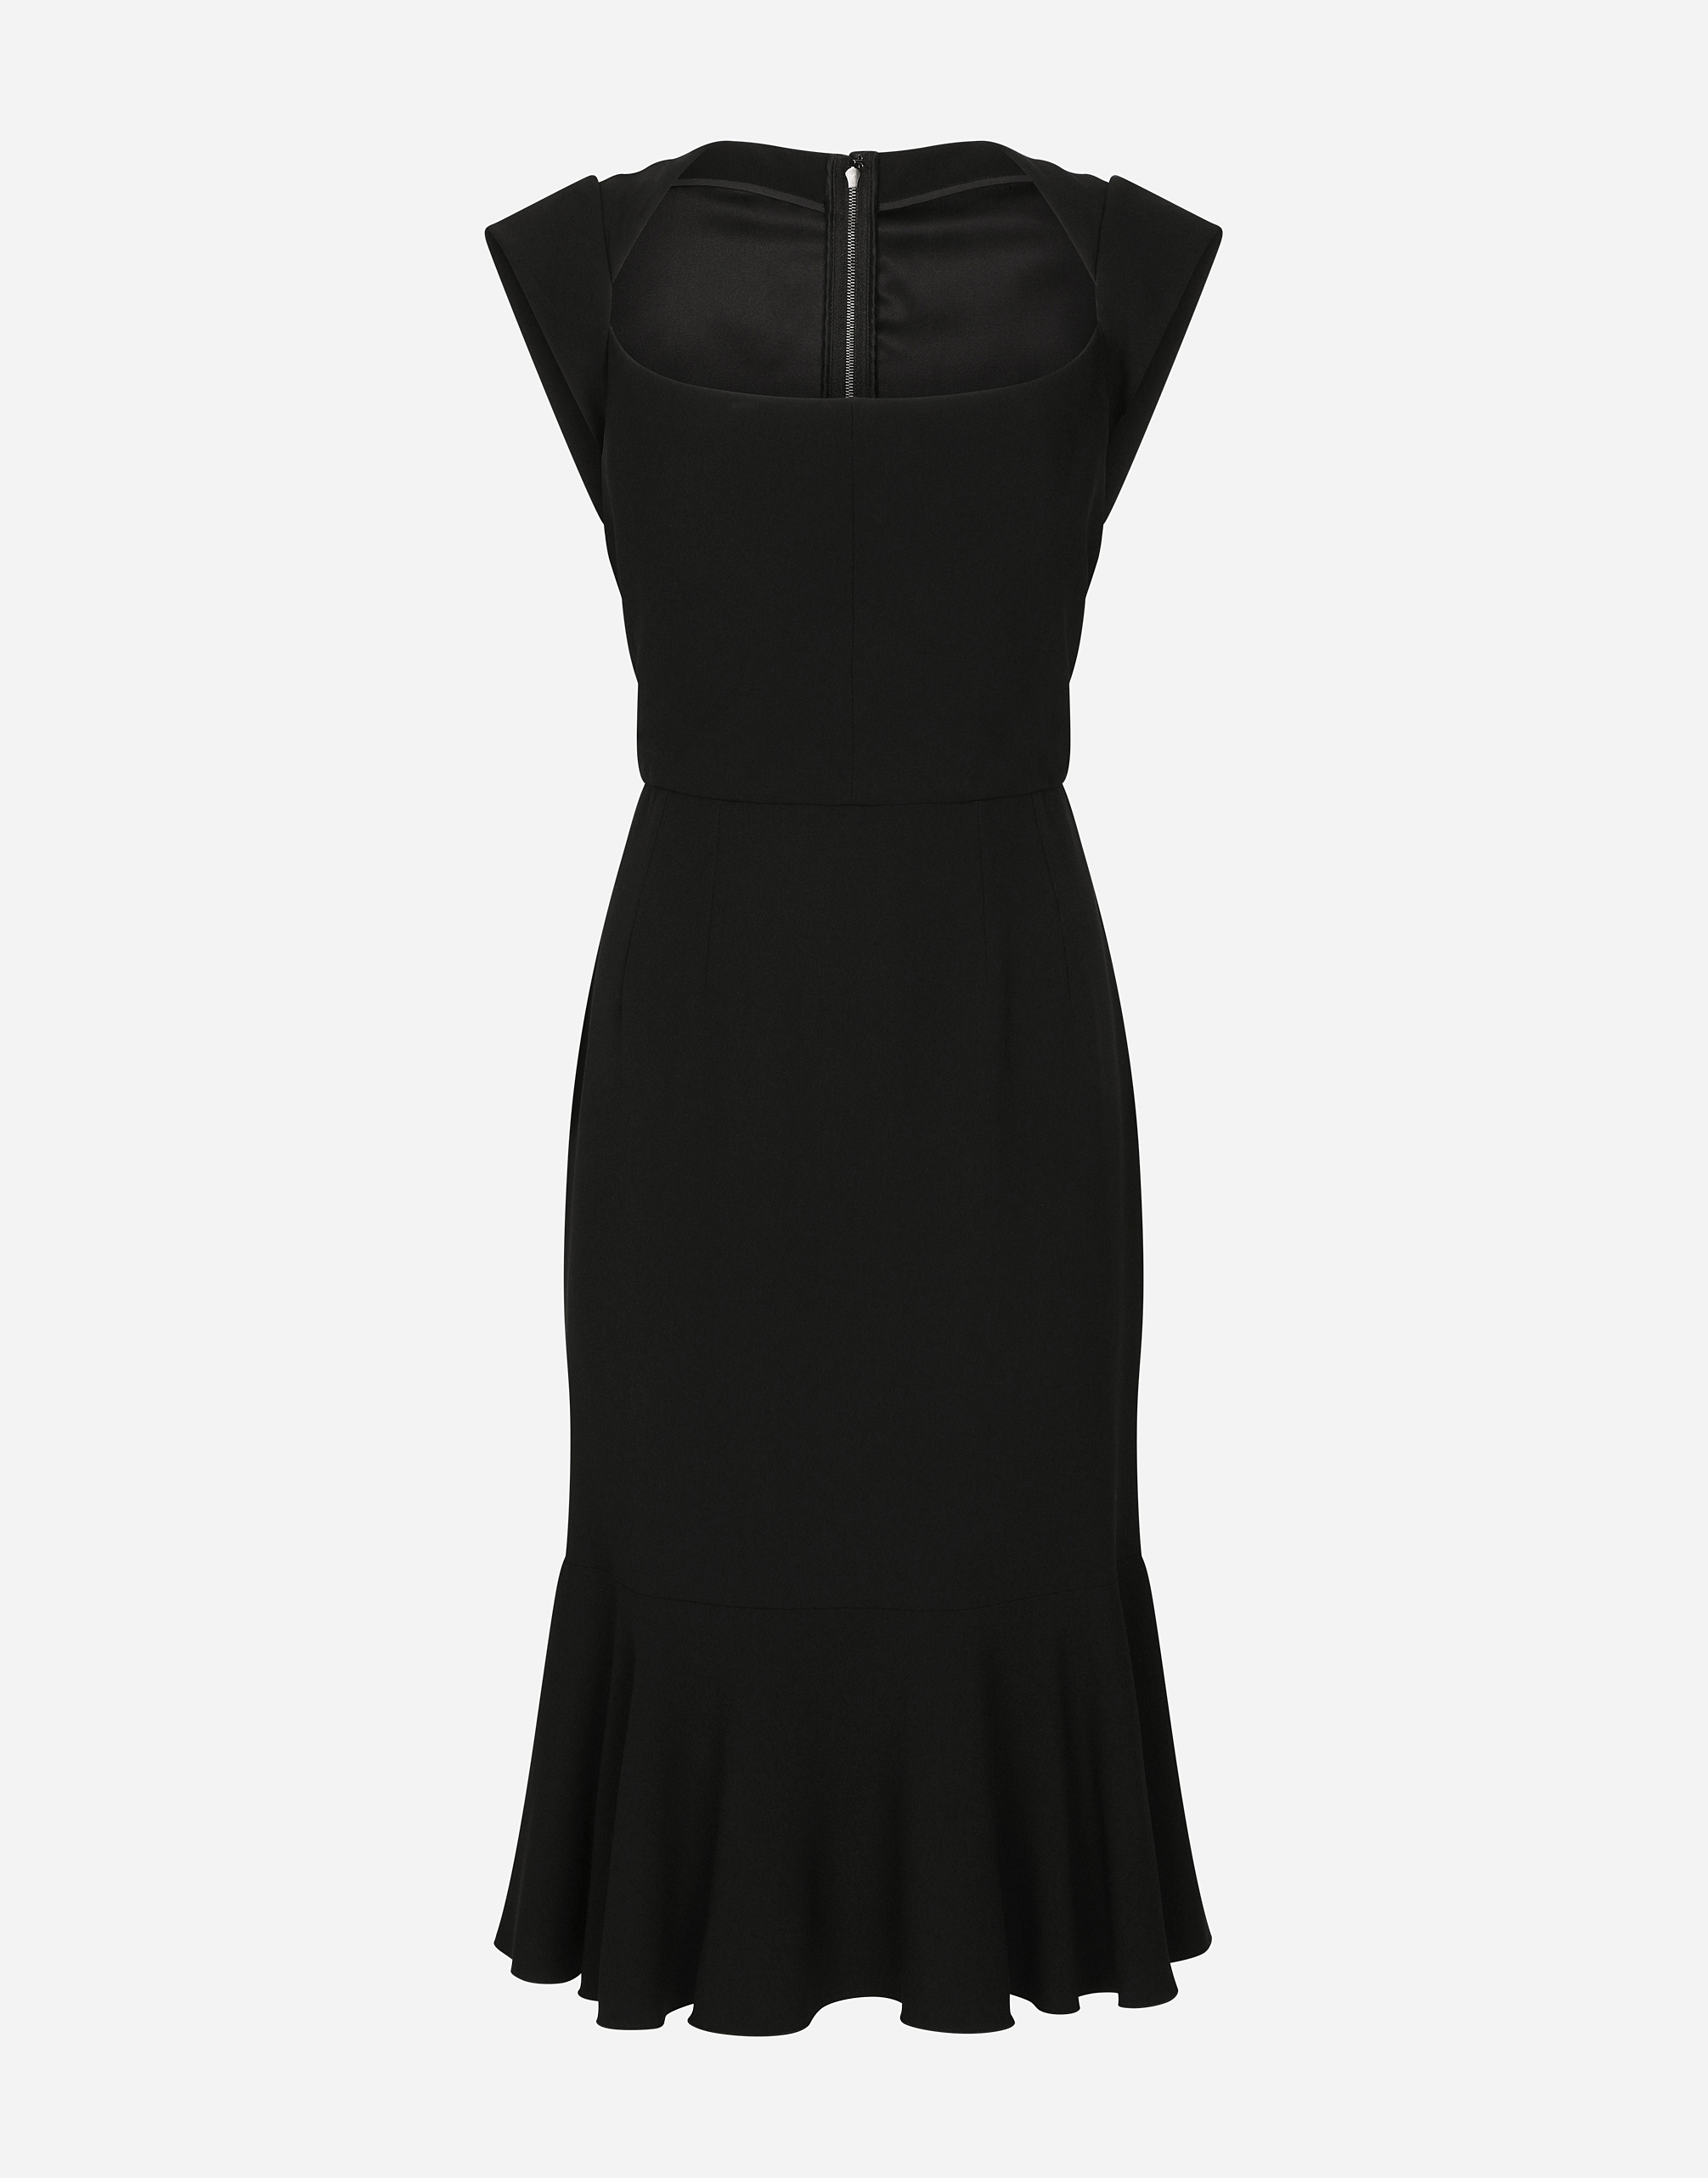 Cady fabric mini dress in Black